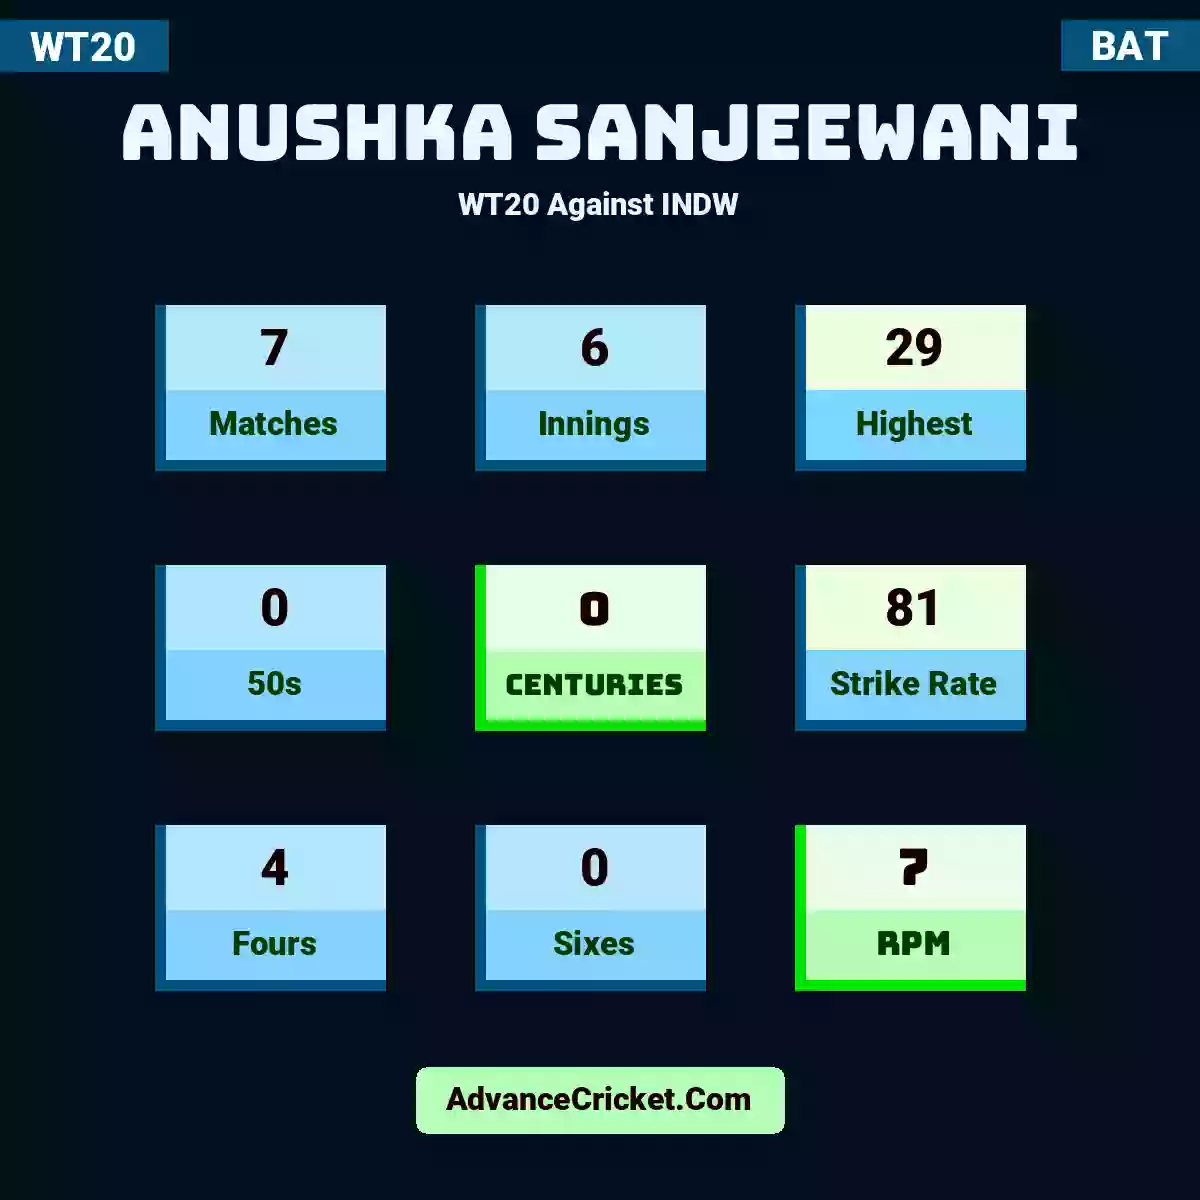 Anushka Sanjeewani WT20  Against INDW, Anushka Sanjeewani played 7 matches, scored 29 runs as highest, 0 half-centuries, and 0 centuries, with a strike rate of 81. A.Sanjeewani hit 4 fours and 0 sixes, with an RPM of 7.